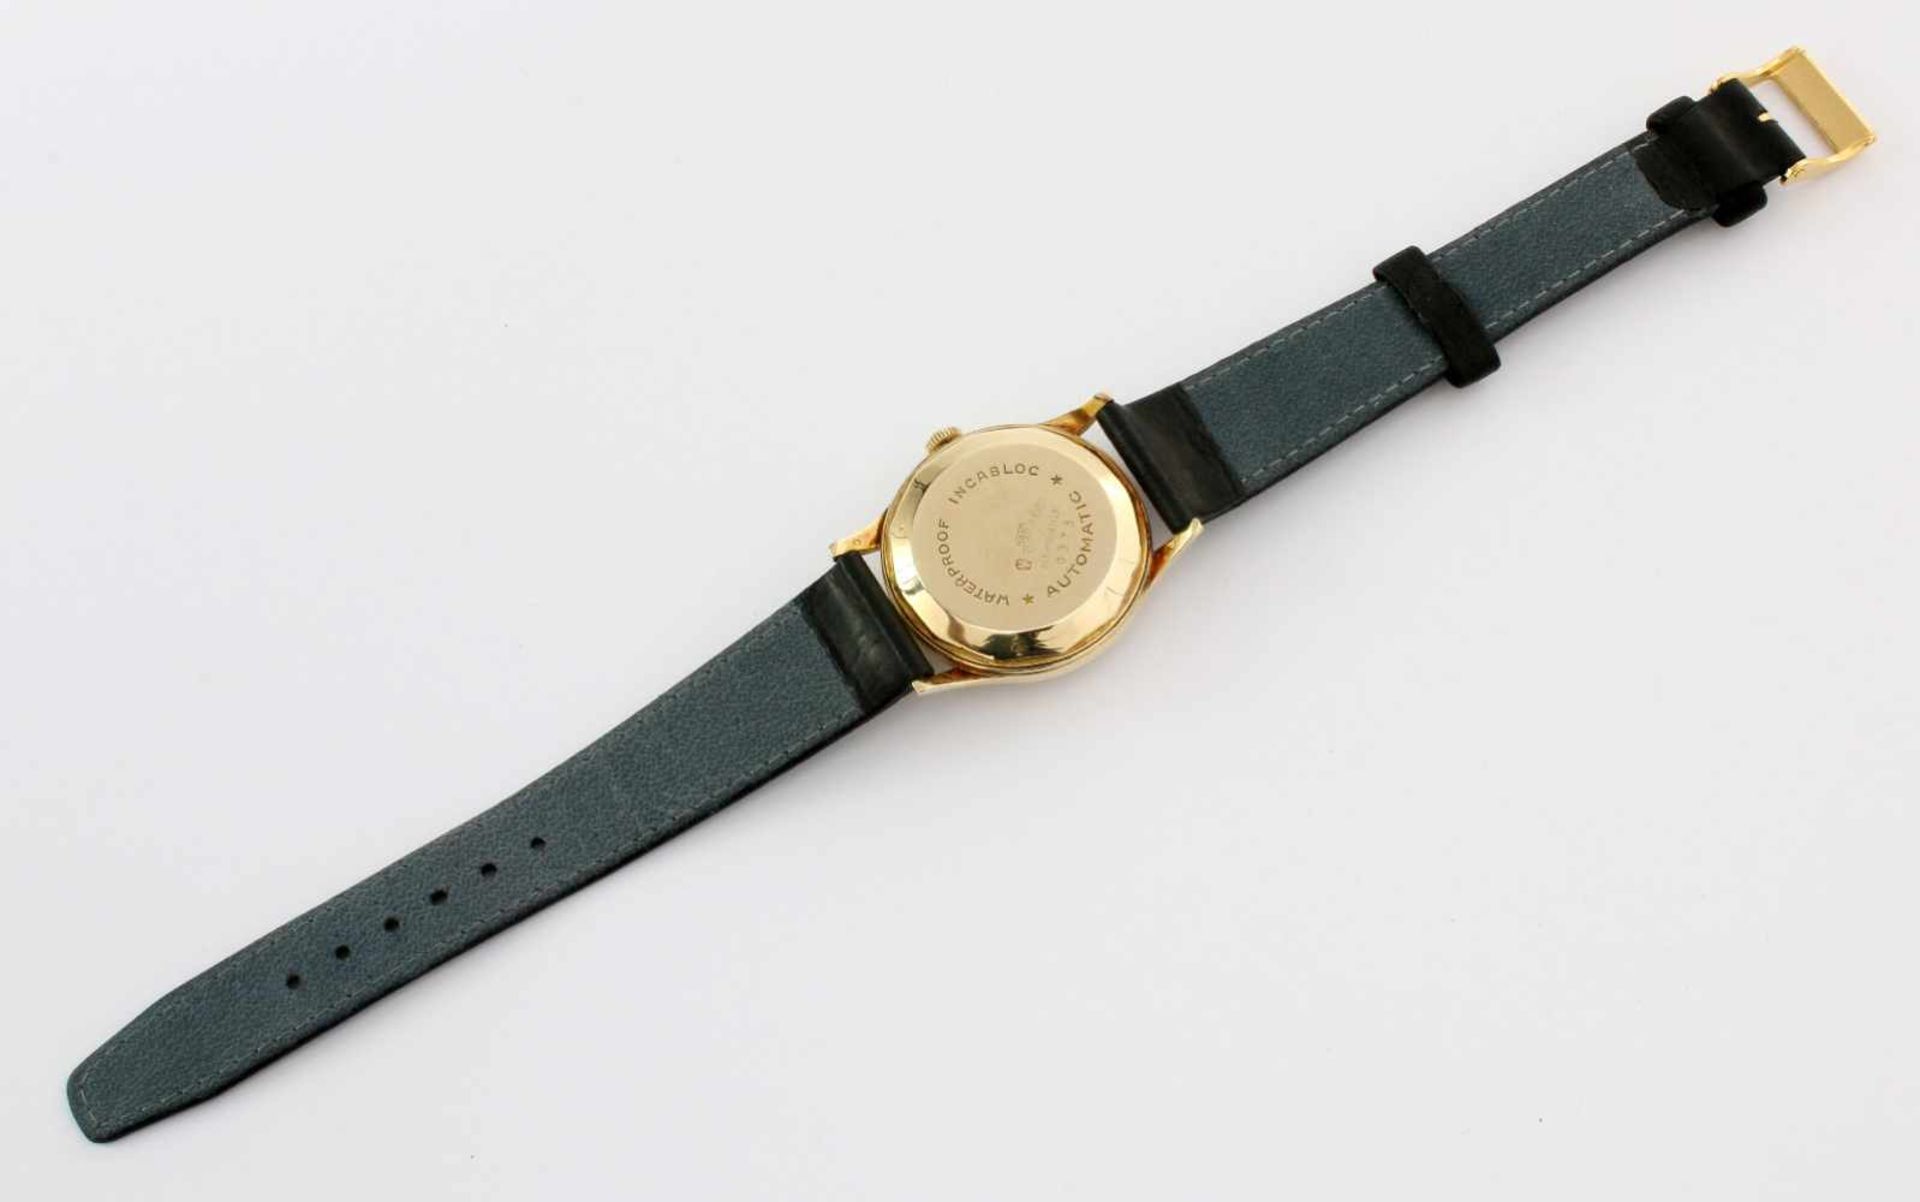 Goldene Armbanduhr Olma - 50/60 JahreAutomatikwerk, Gehäuse GG 585, Ø 32 mm, Plexiglas (ohne - Bild 2 aus 3